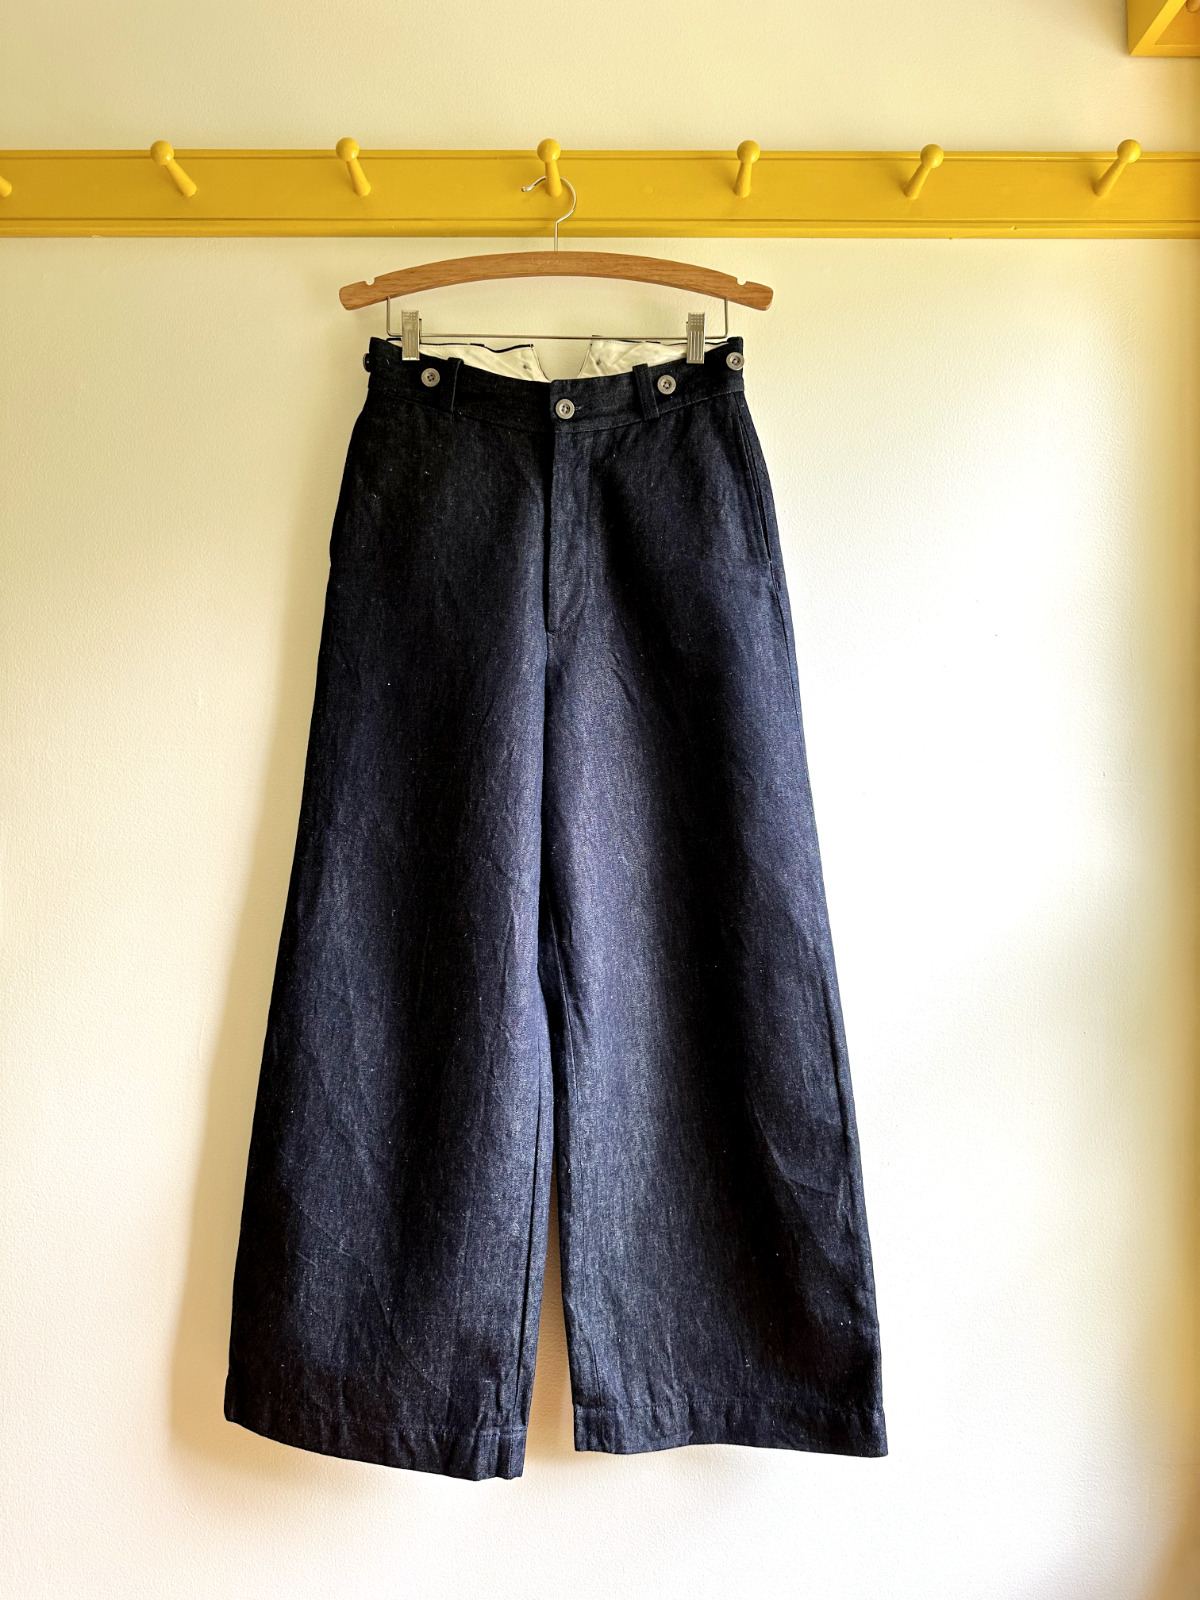 NIGEL CABOURN UK dark rinse indigo denim sailor jeans trouser pants high waist